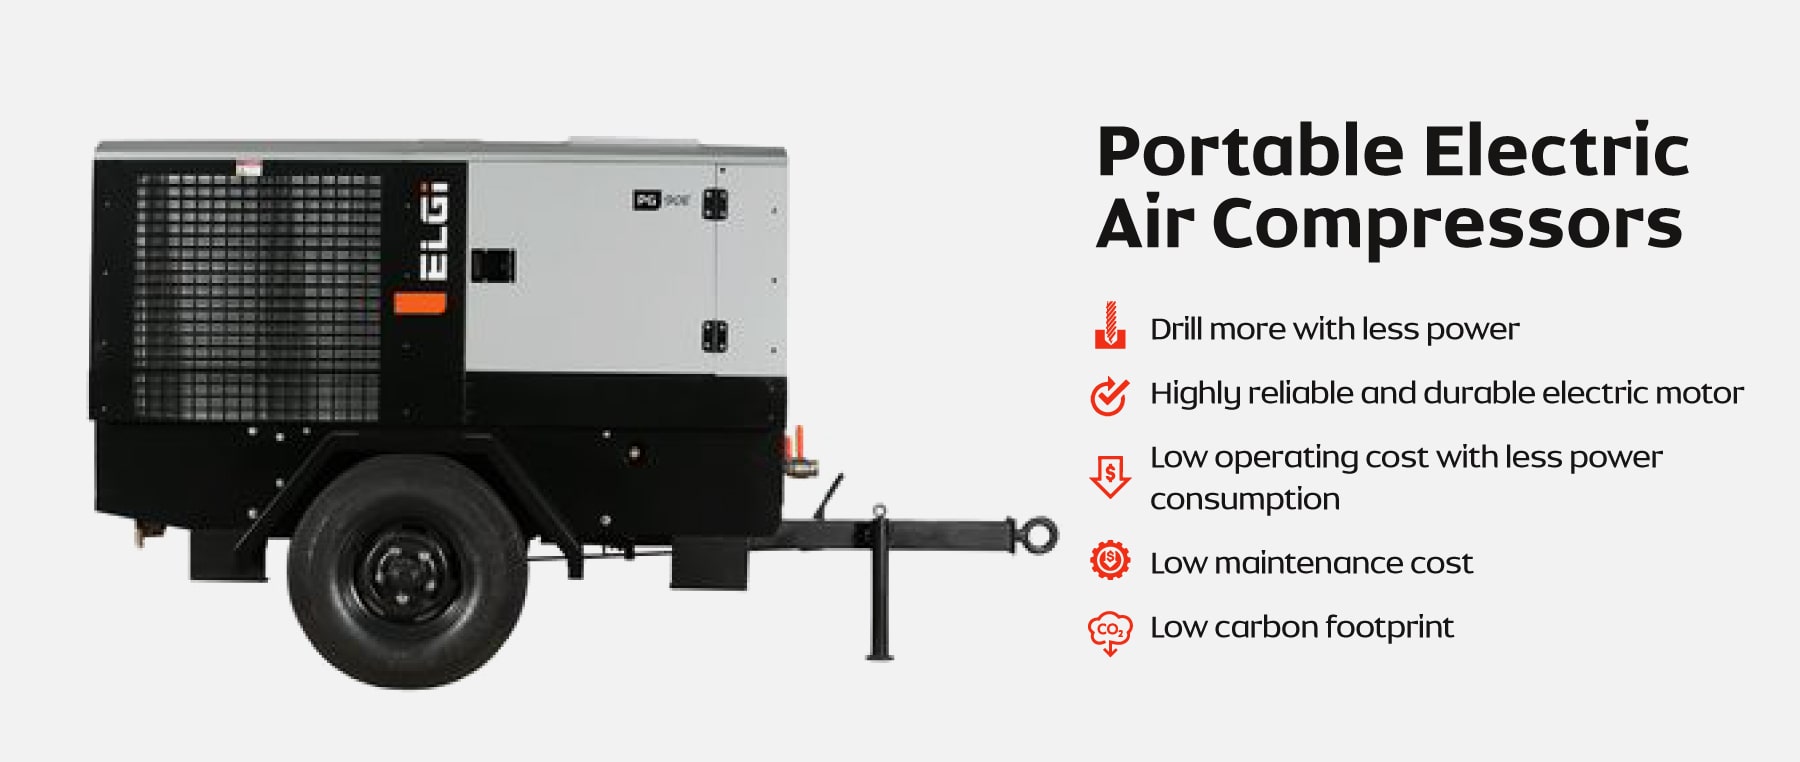 Portable electric air compressors